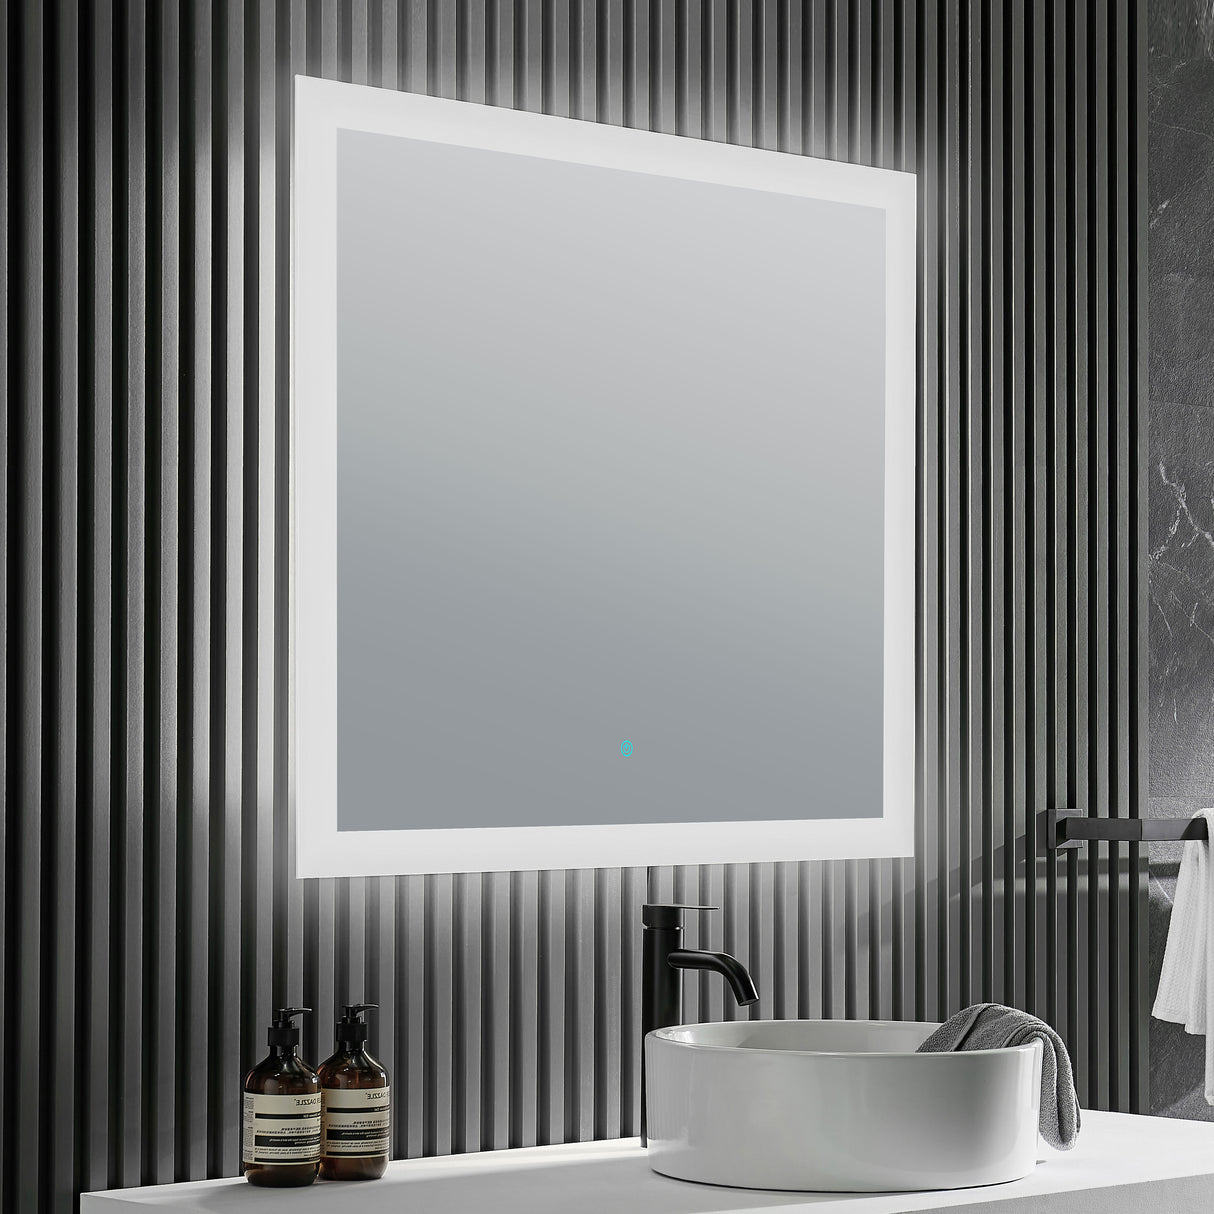 ANZZI BA-LMDFX008AL Mars 32 in. x 30 in. Frameless Rectangular LED Bathroom Mirror with Defogger in Silver